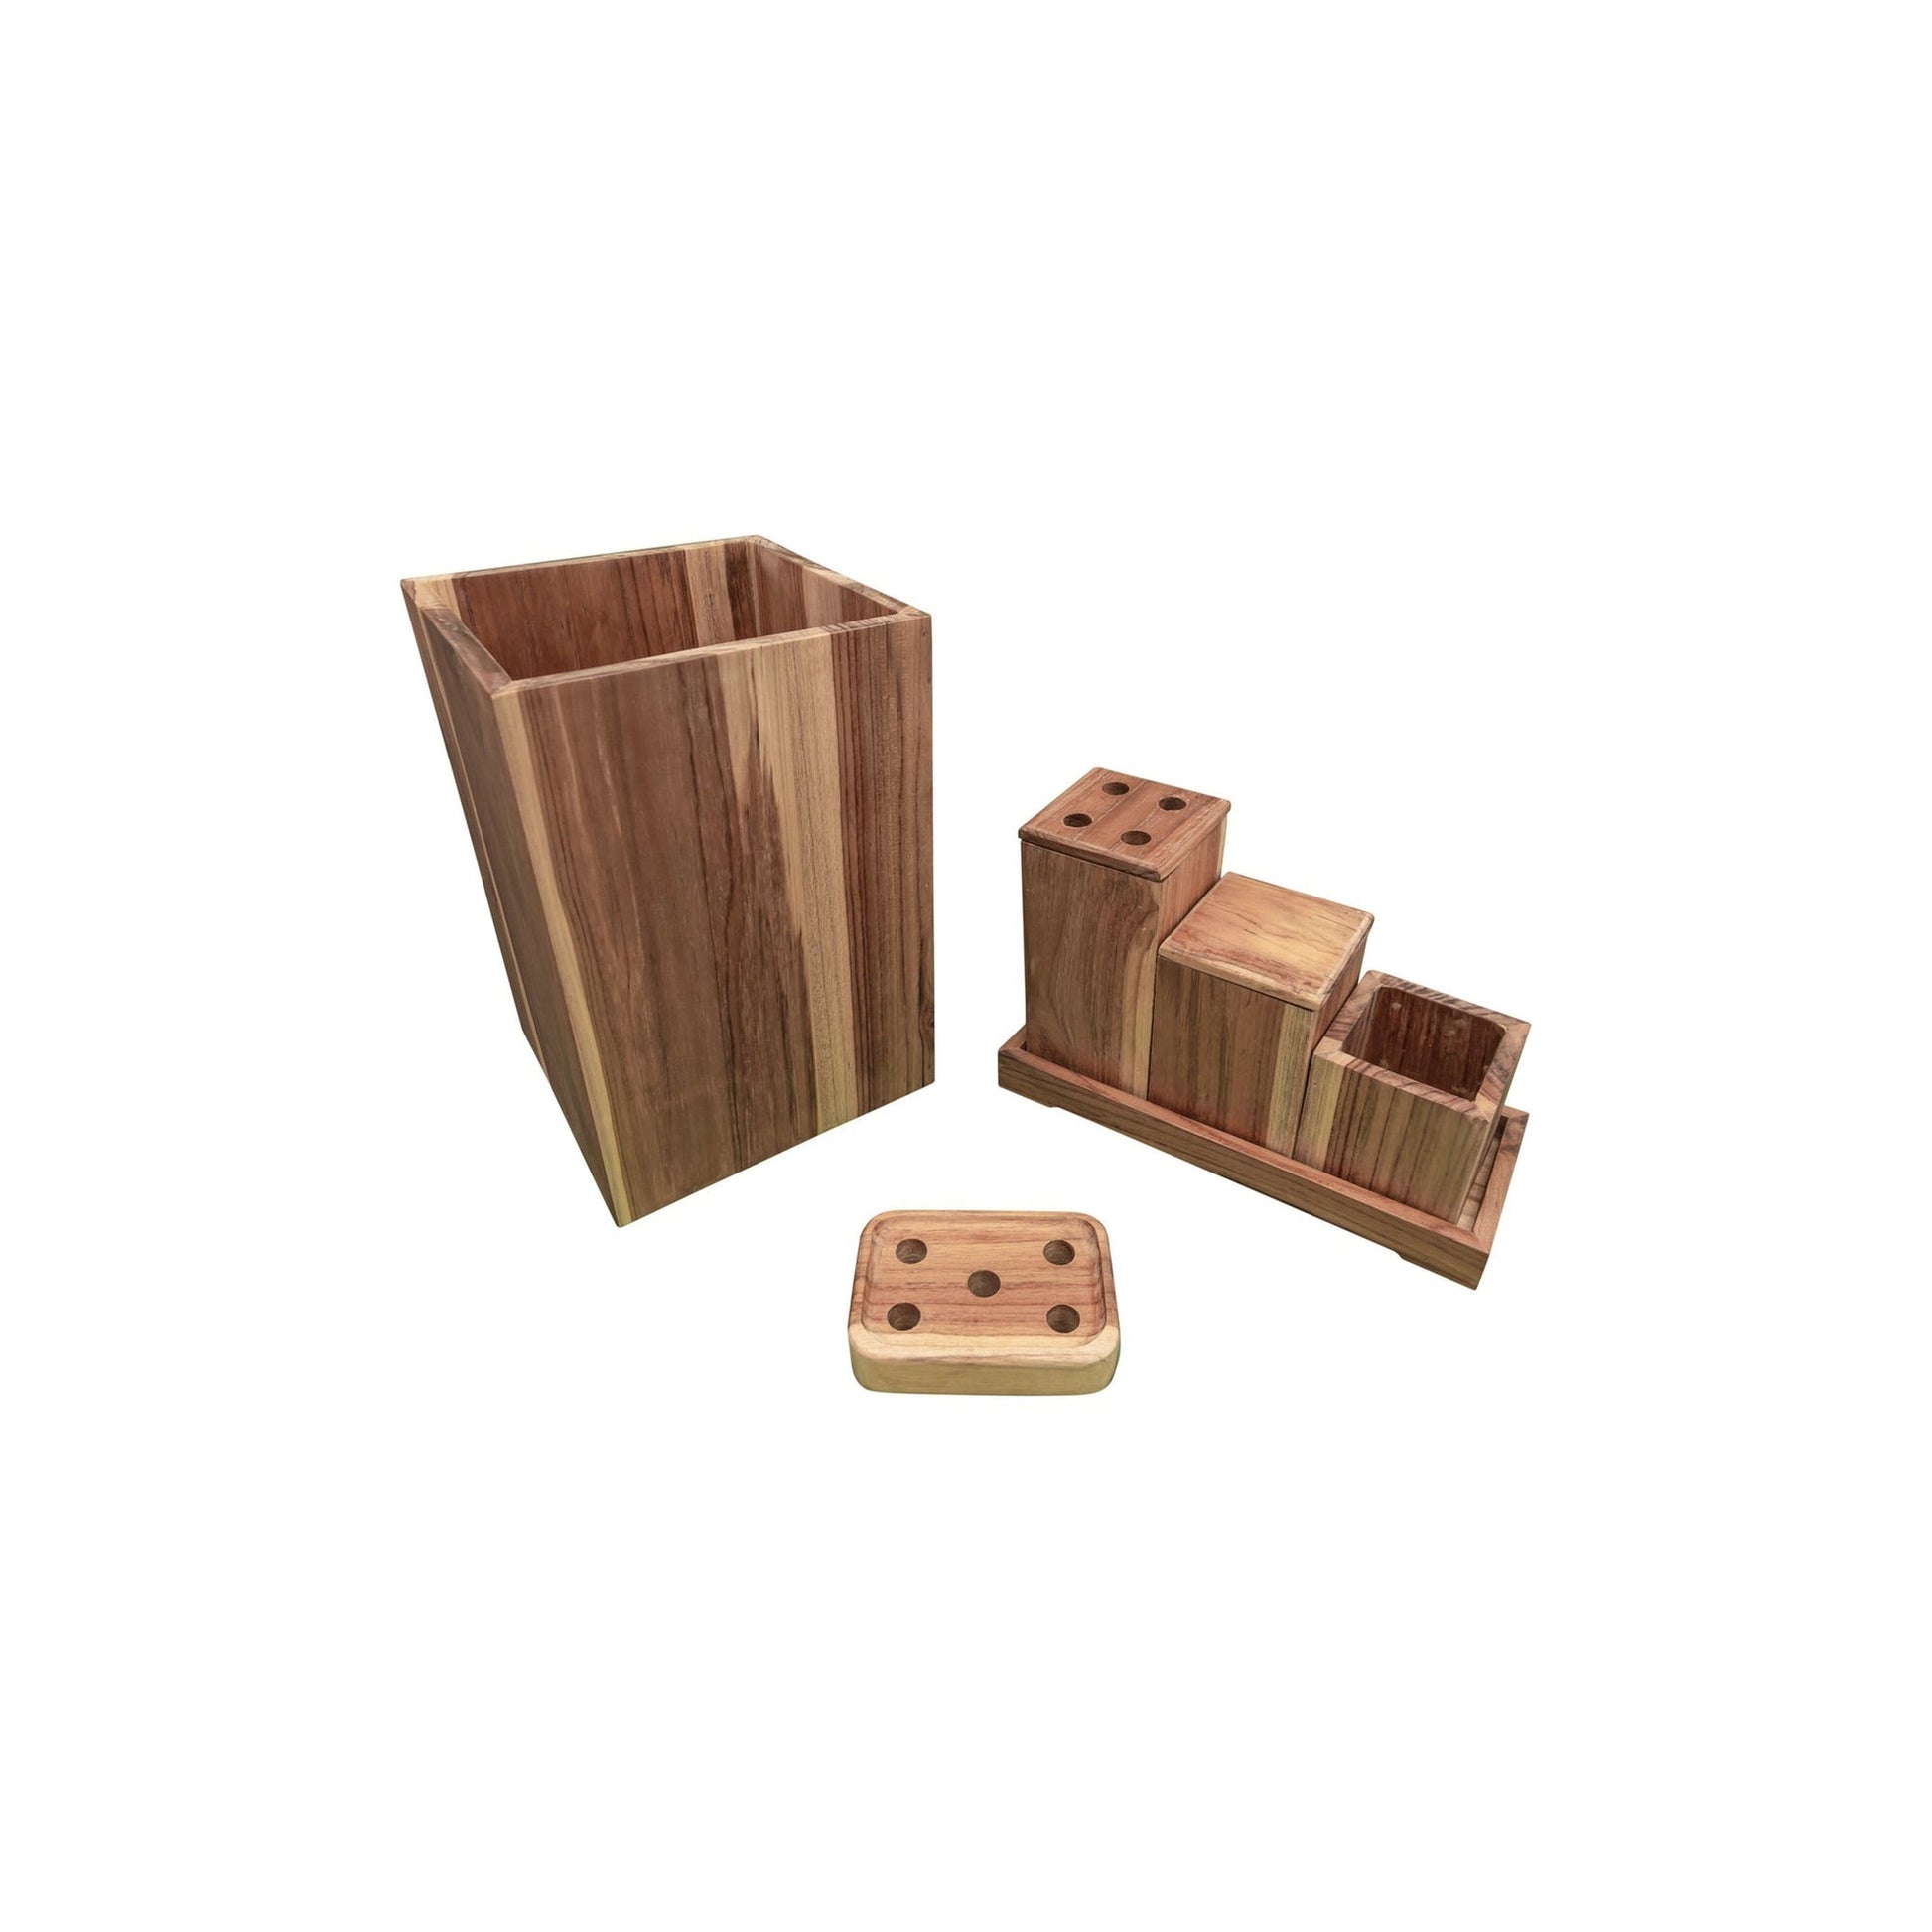 EcoDecors Eleganto 9-Piece EarthyTeak Solid Teak Wood Bathroom Amenities Organizer Set